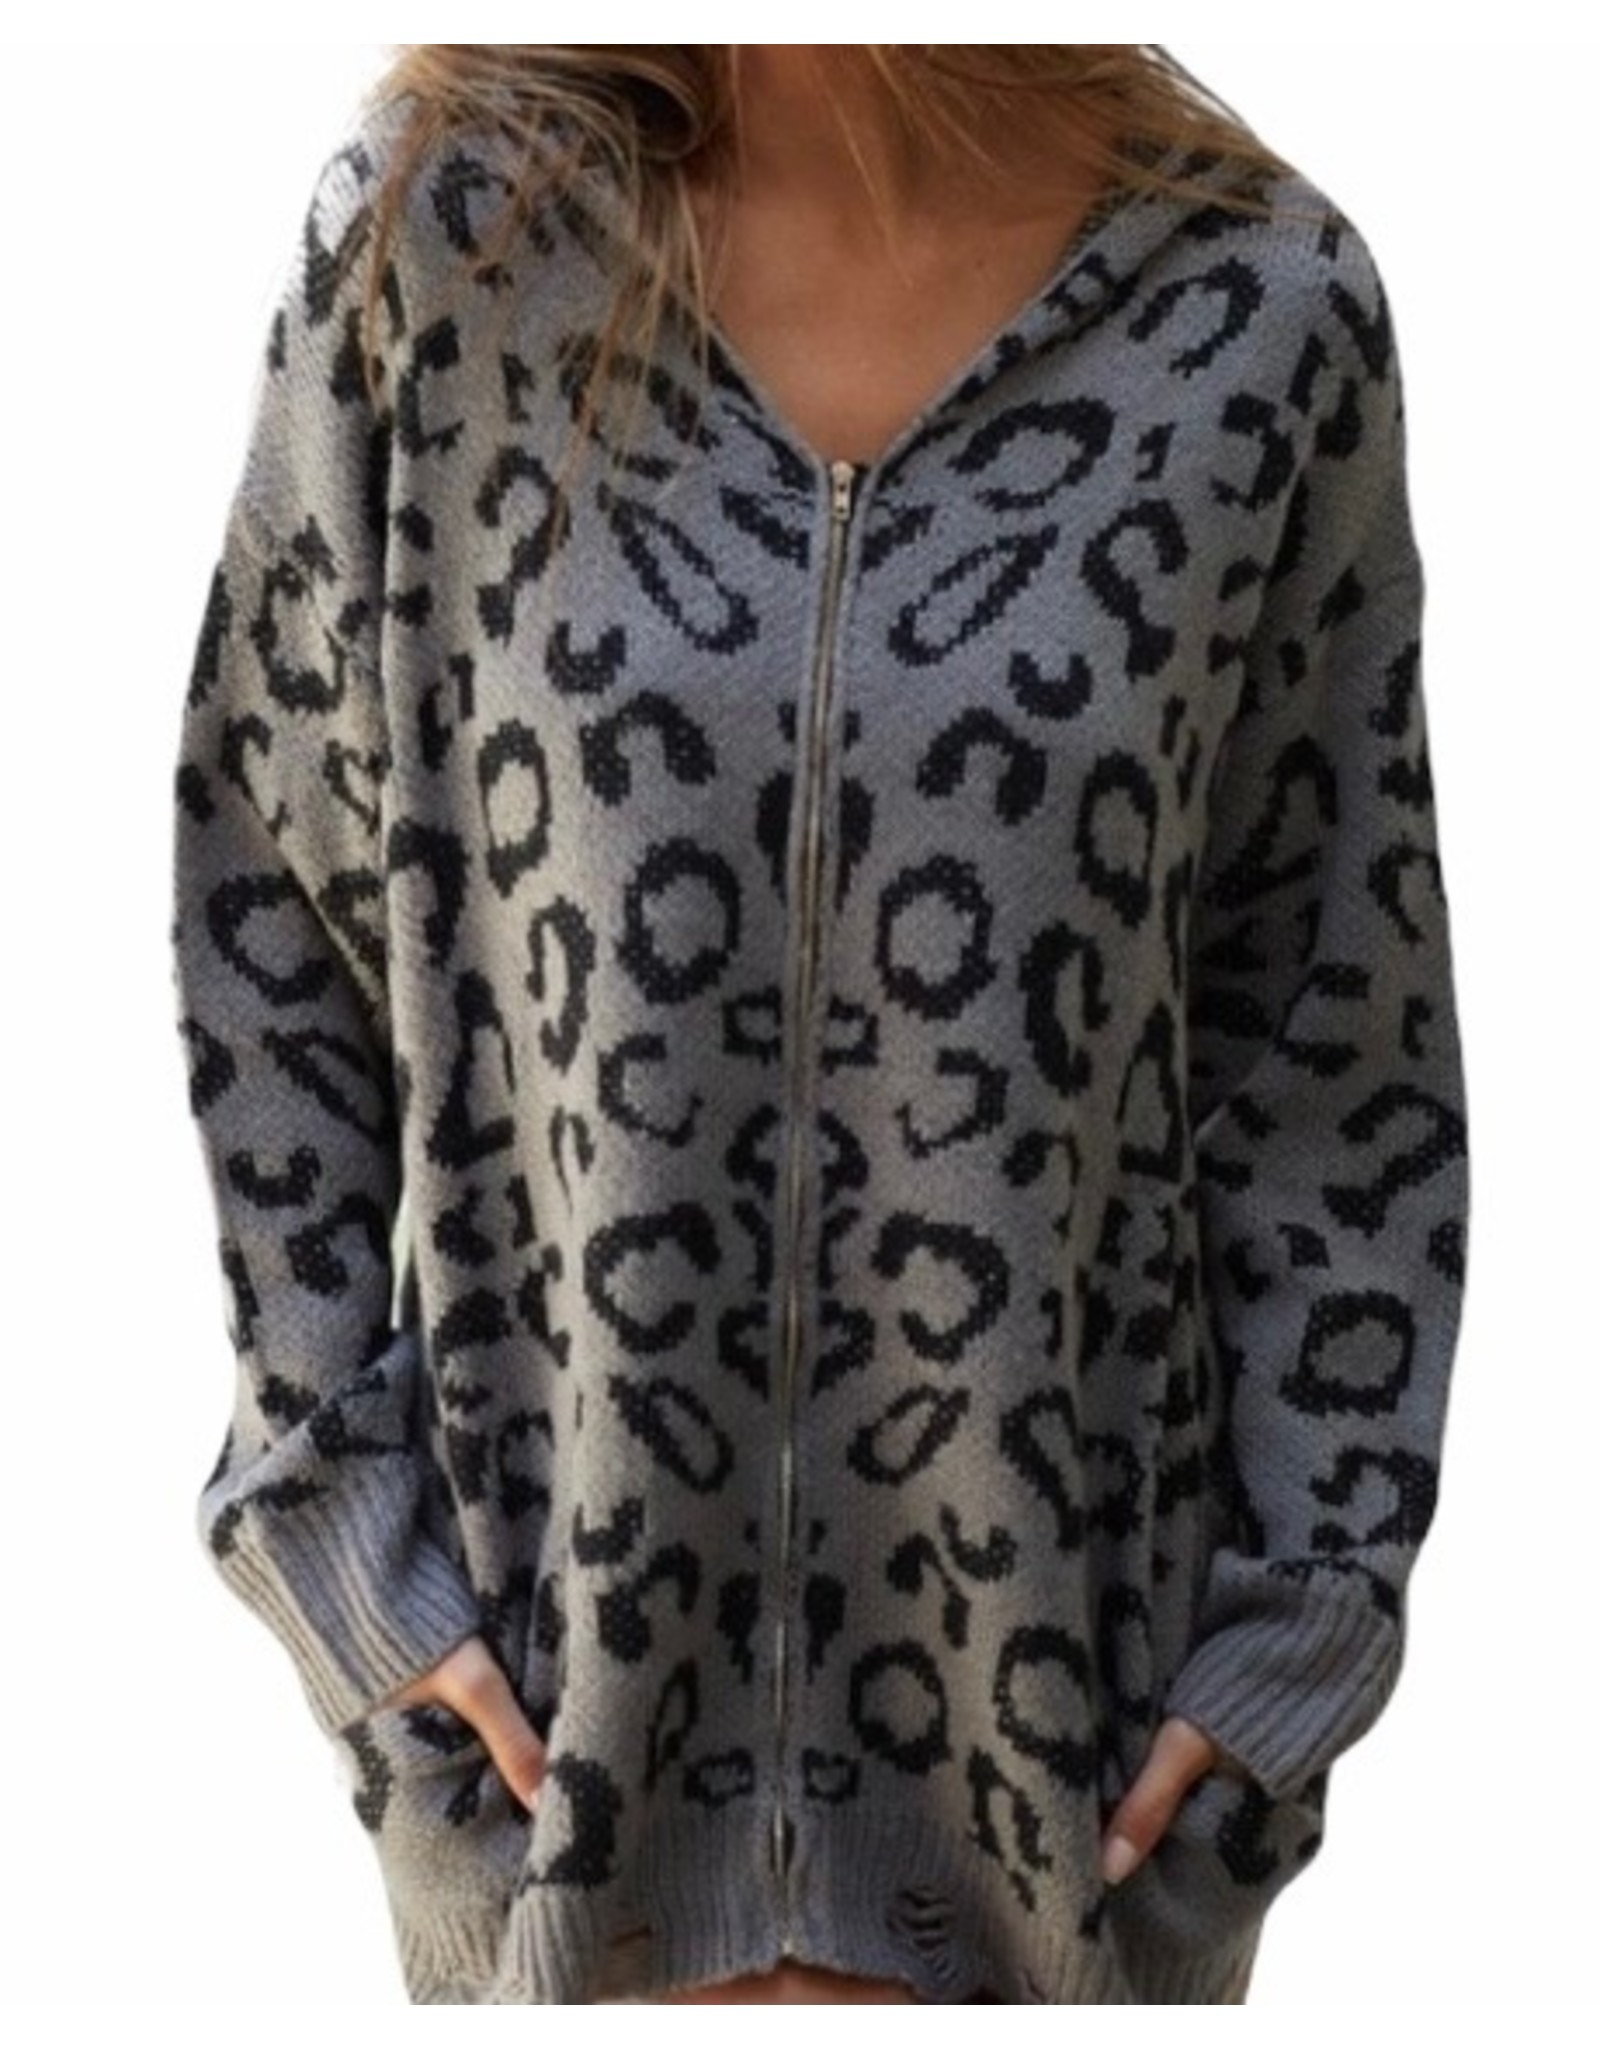 LATA Dare to Dream Leopard Zip Up Sweater Jacket